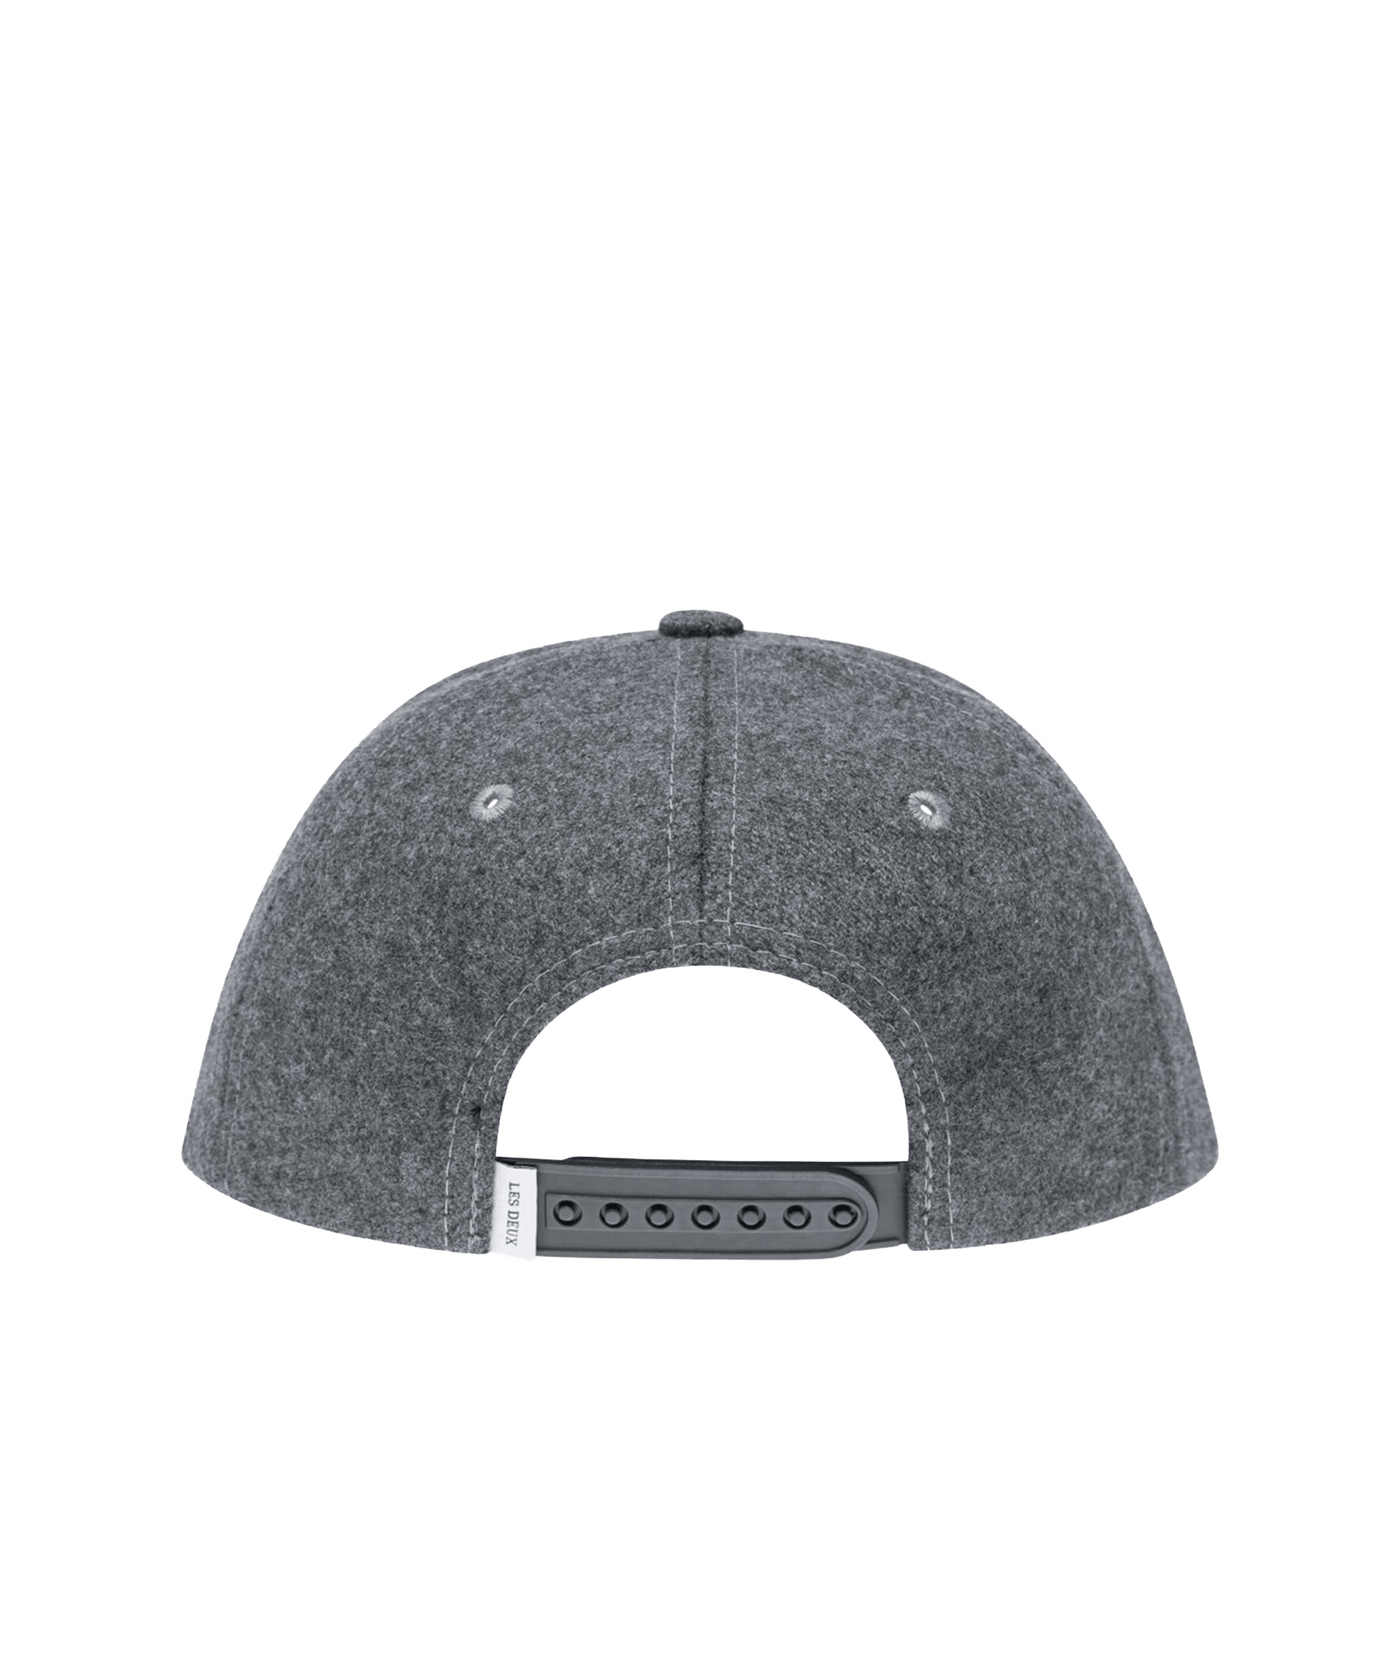 Les Deux - Ldm702080 - Encore Wool Baseball Cap - Charcoal